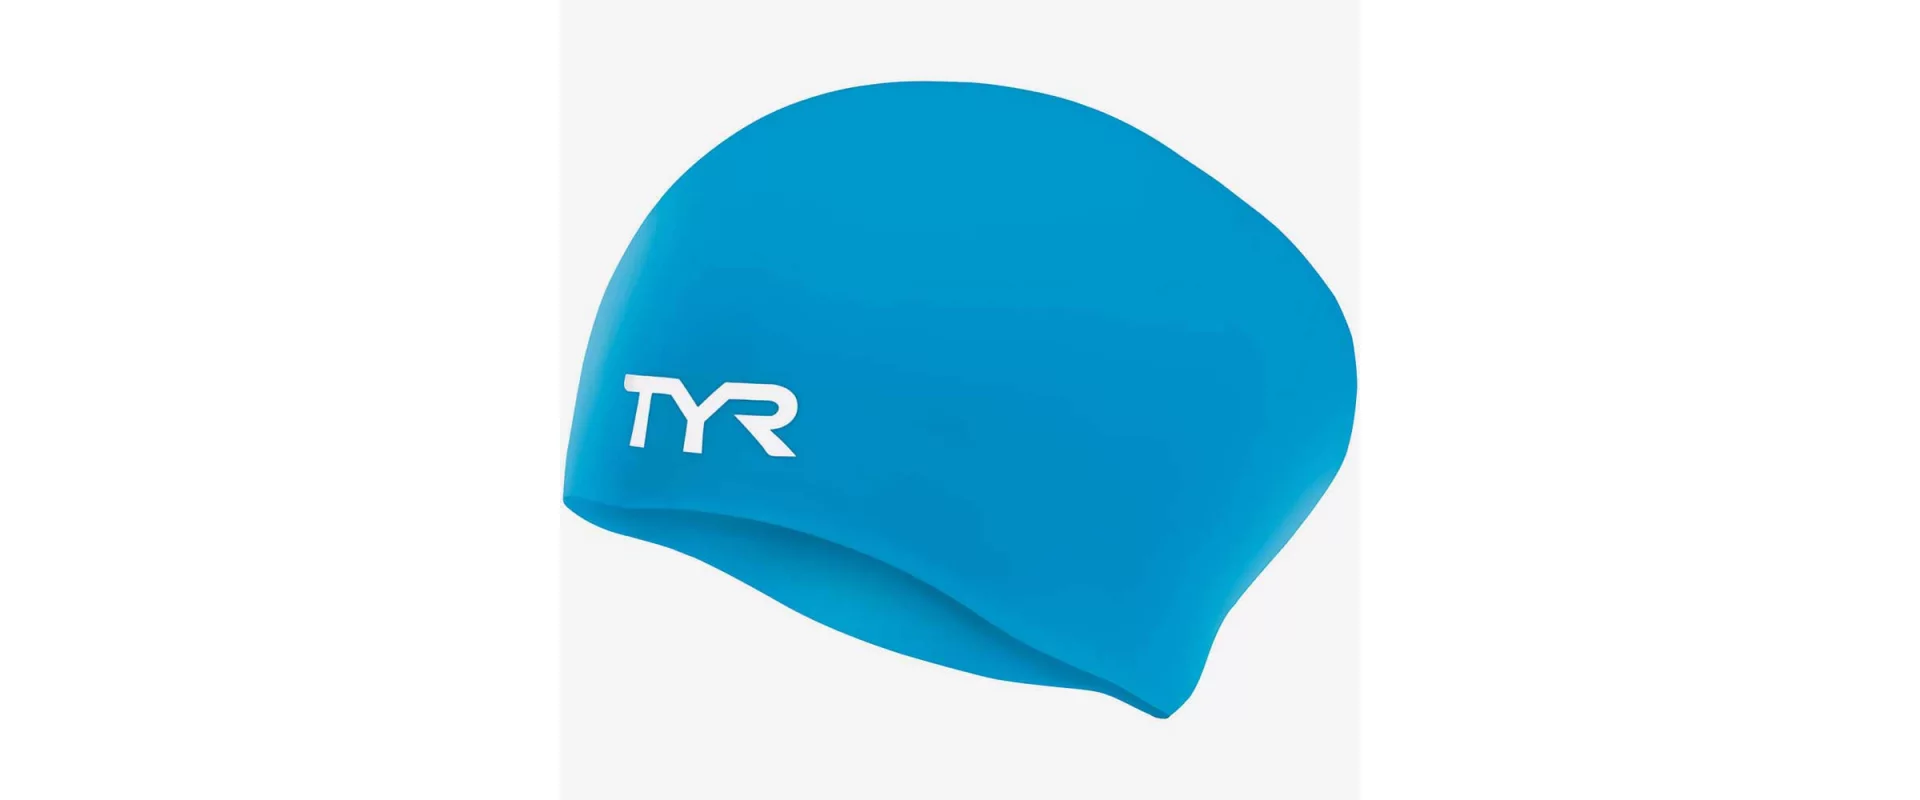 TYR Long Hair Wrinkle Free Silicone Cap / Шапочка силиконовая для длинных волос фото 1